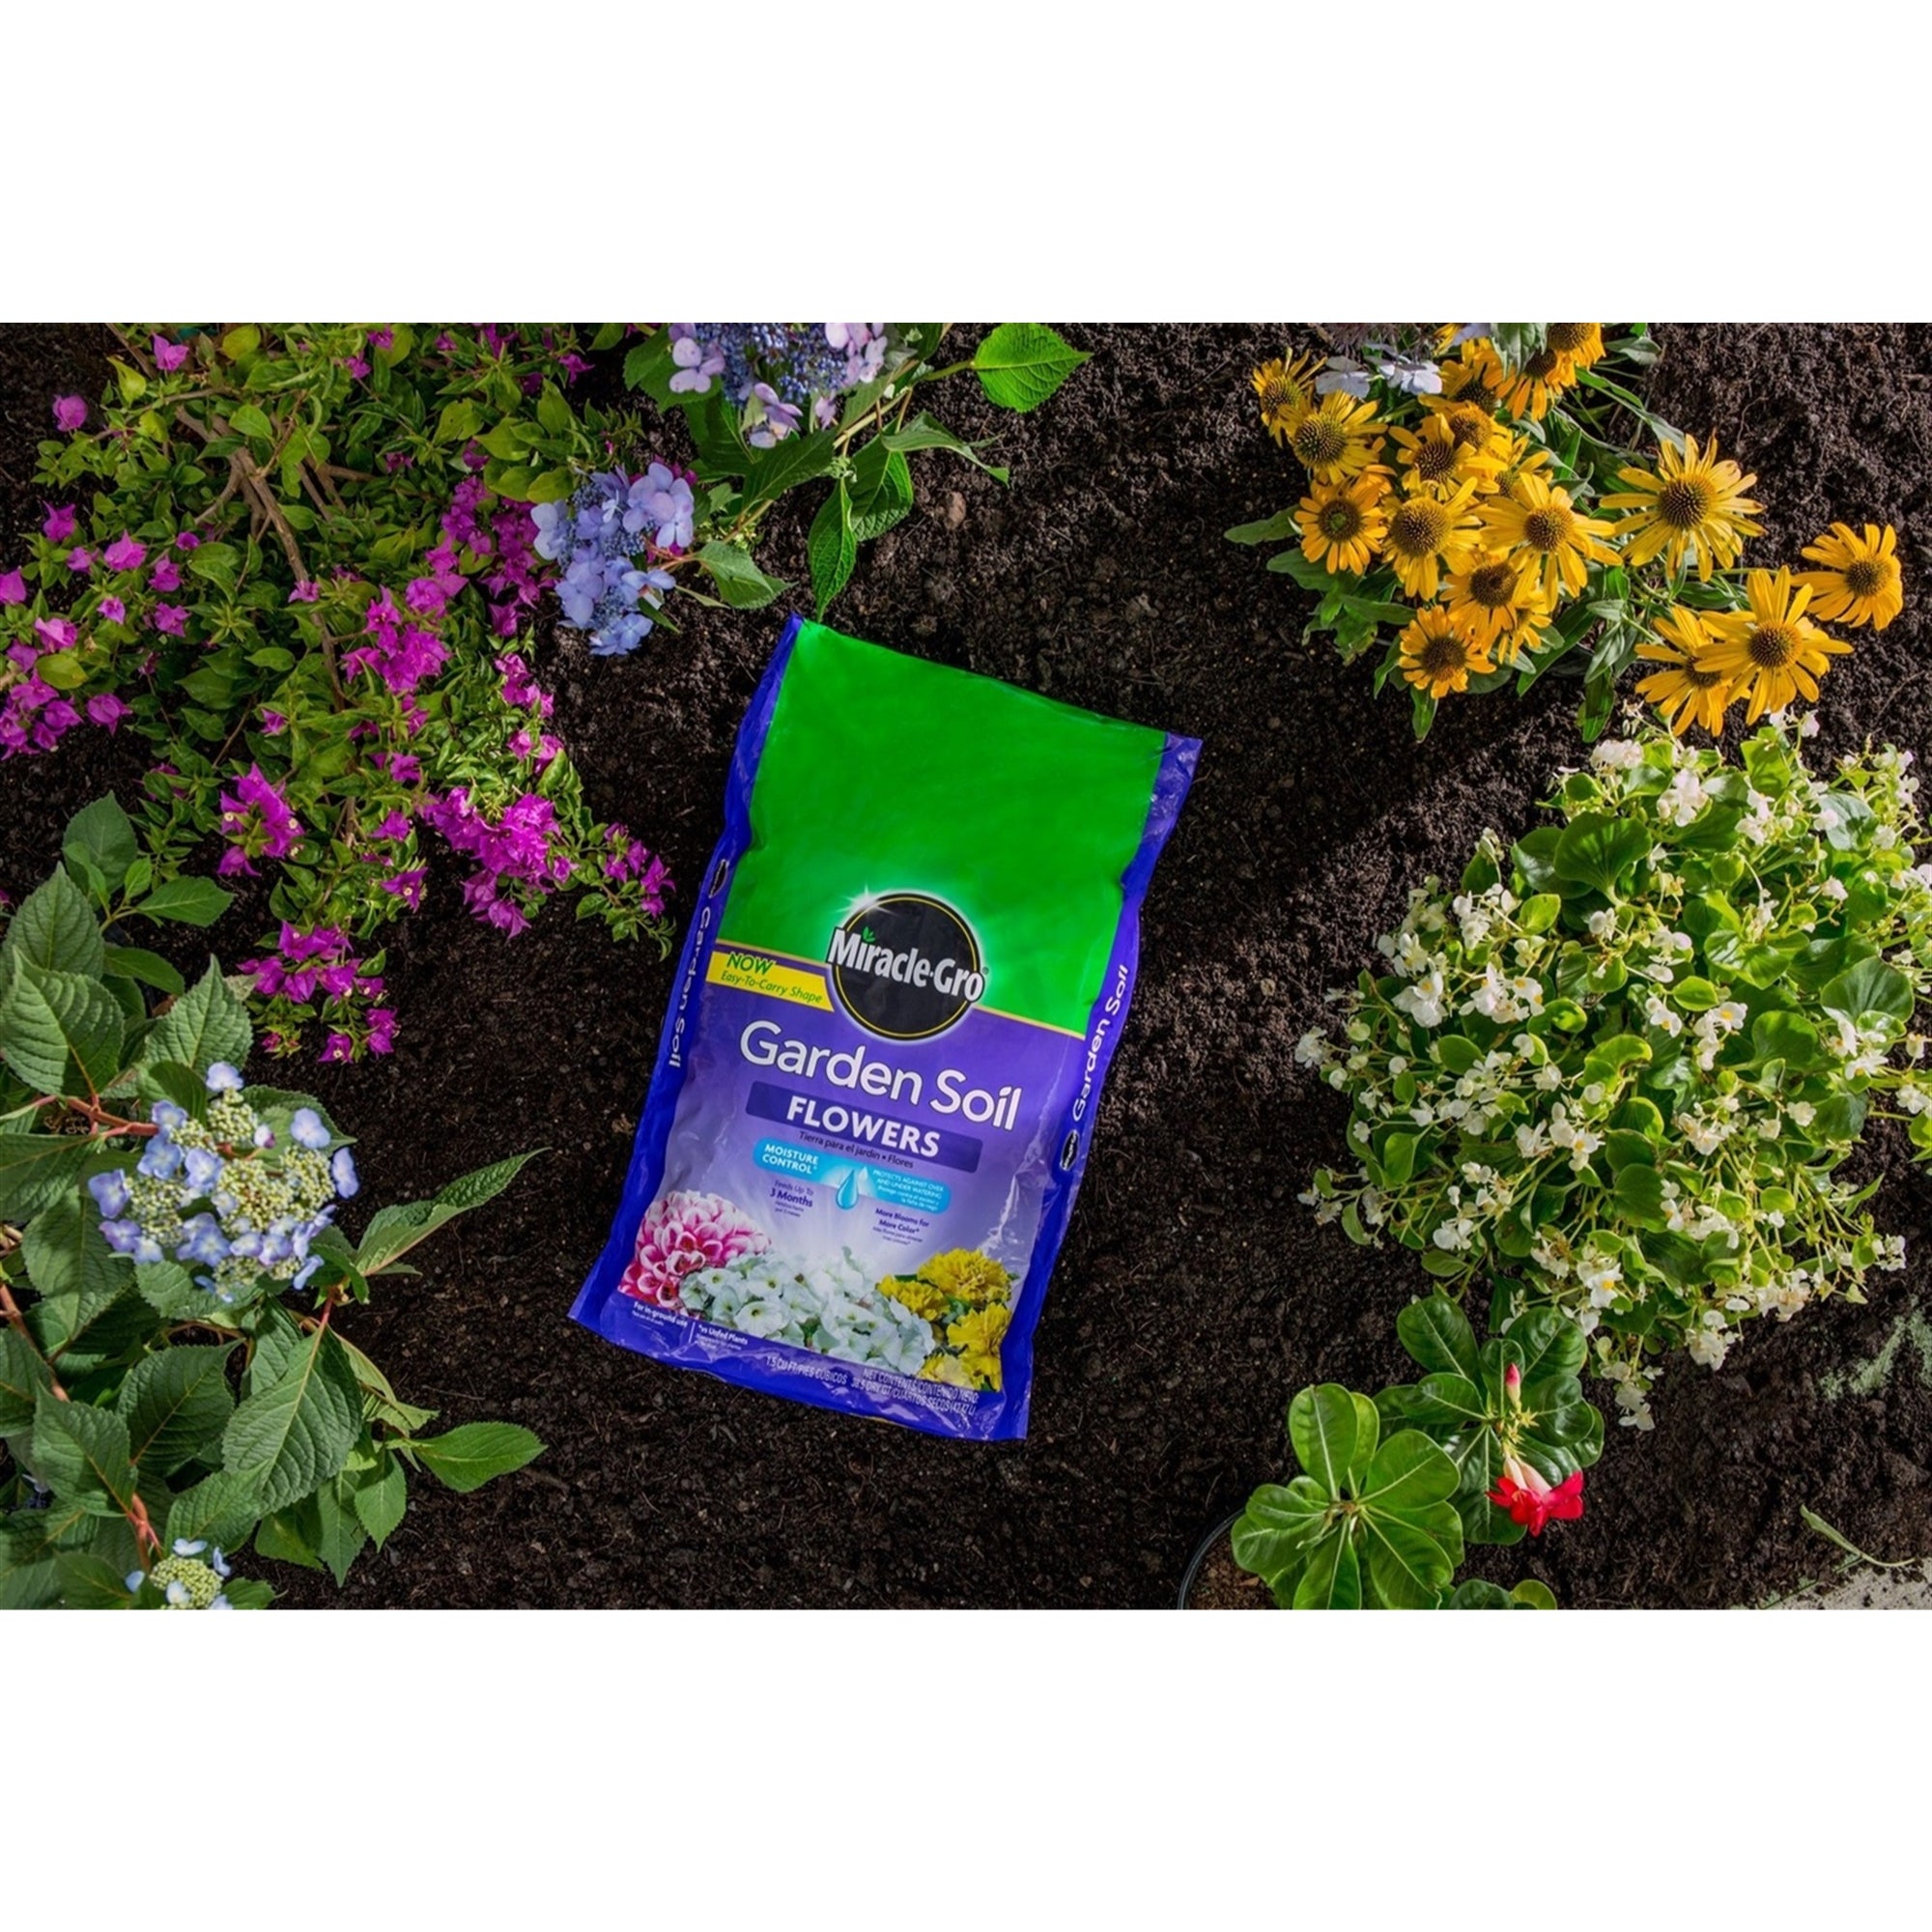 Miracle-Gro Garden Soil for Flowers, 1.5 Cu Ft